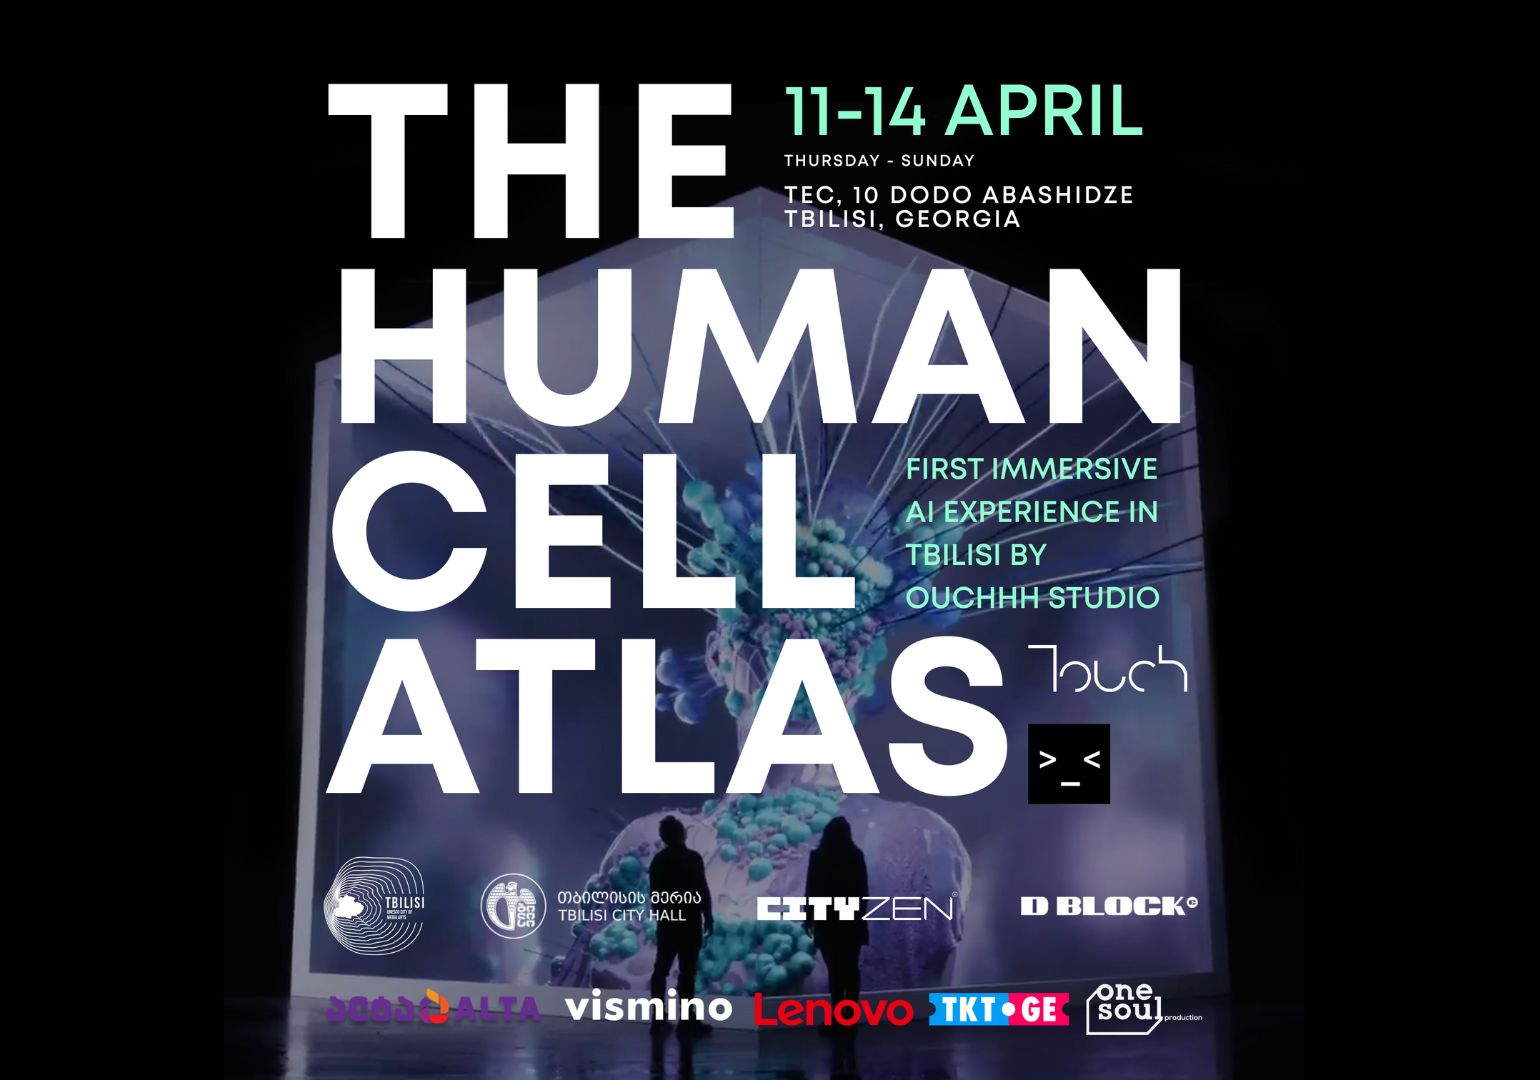 “THE HUMAN CELL ATLAS” - OUCHHH სტუდიის მსოფლიოში ცნობილი იმერსიული ინსტალაცია თბილისში ჩამოდის